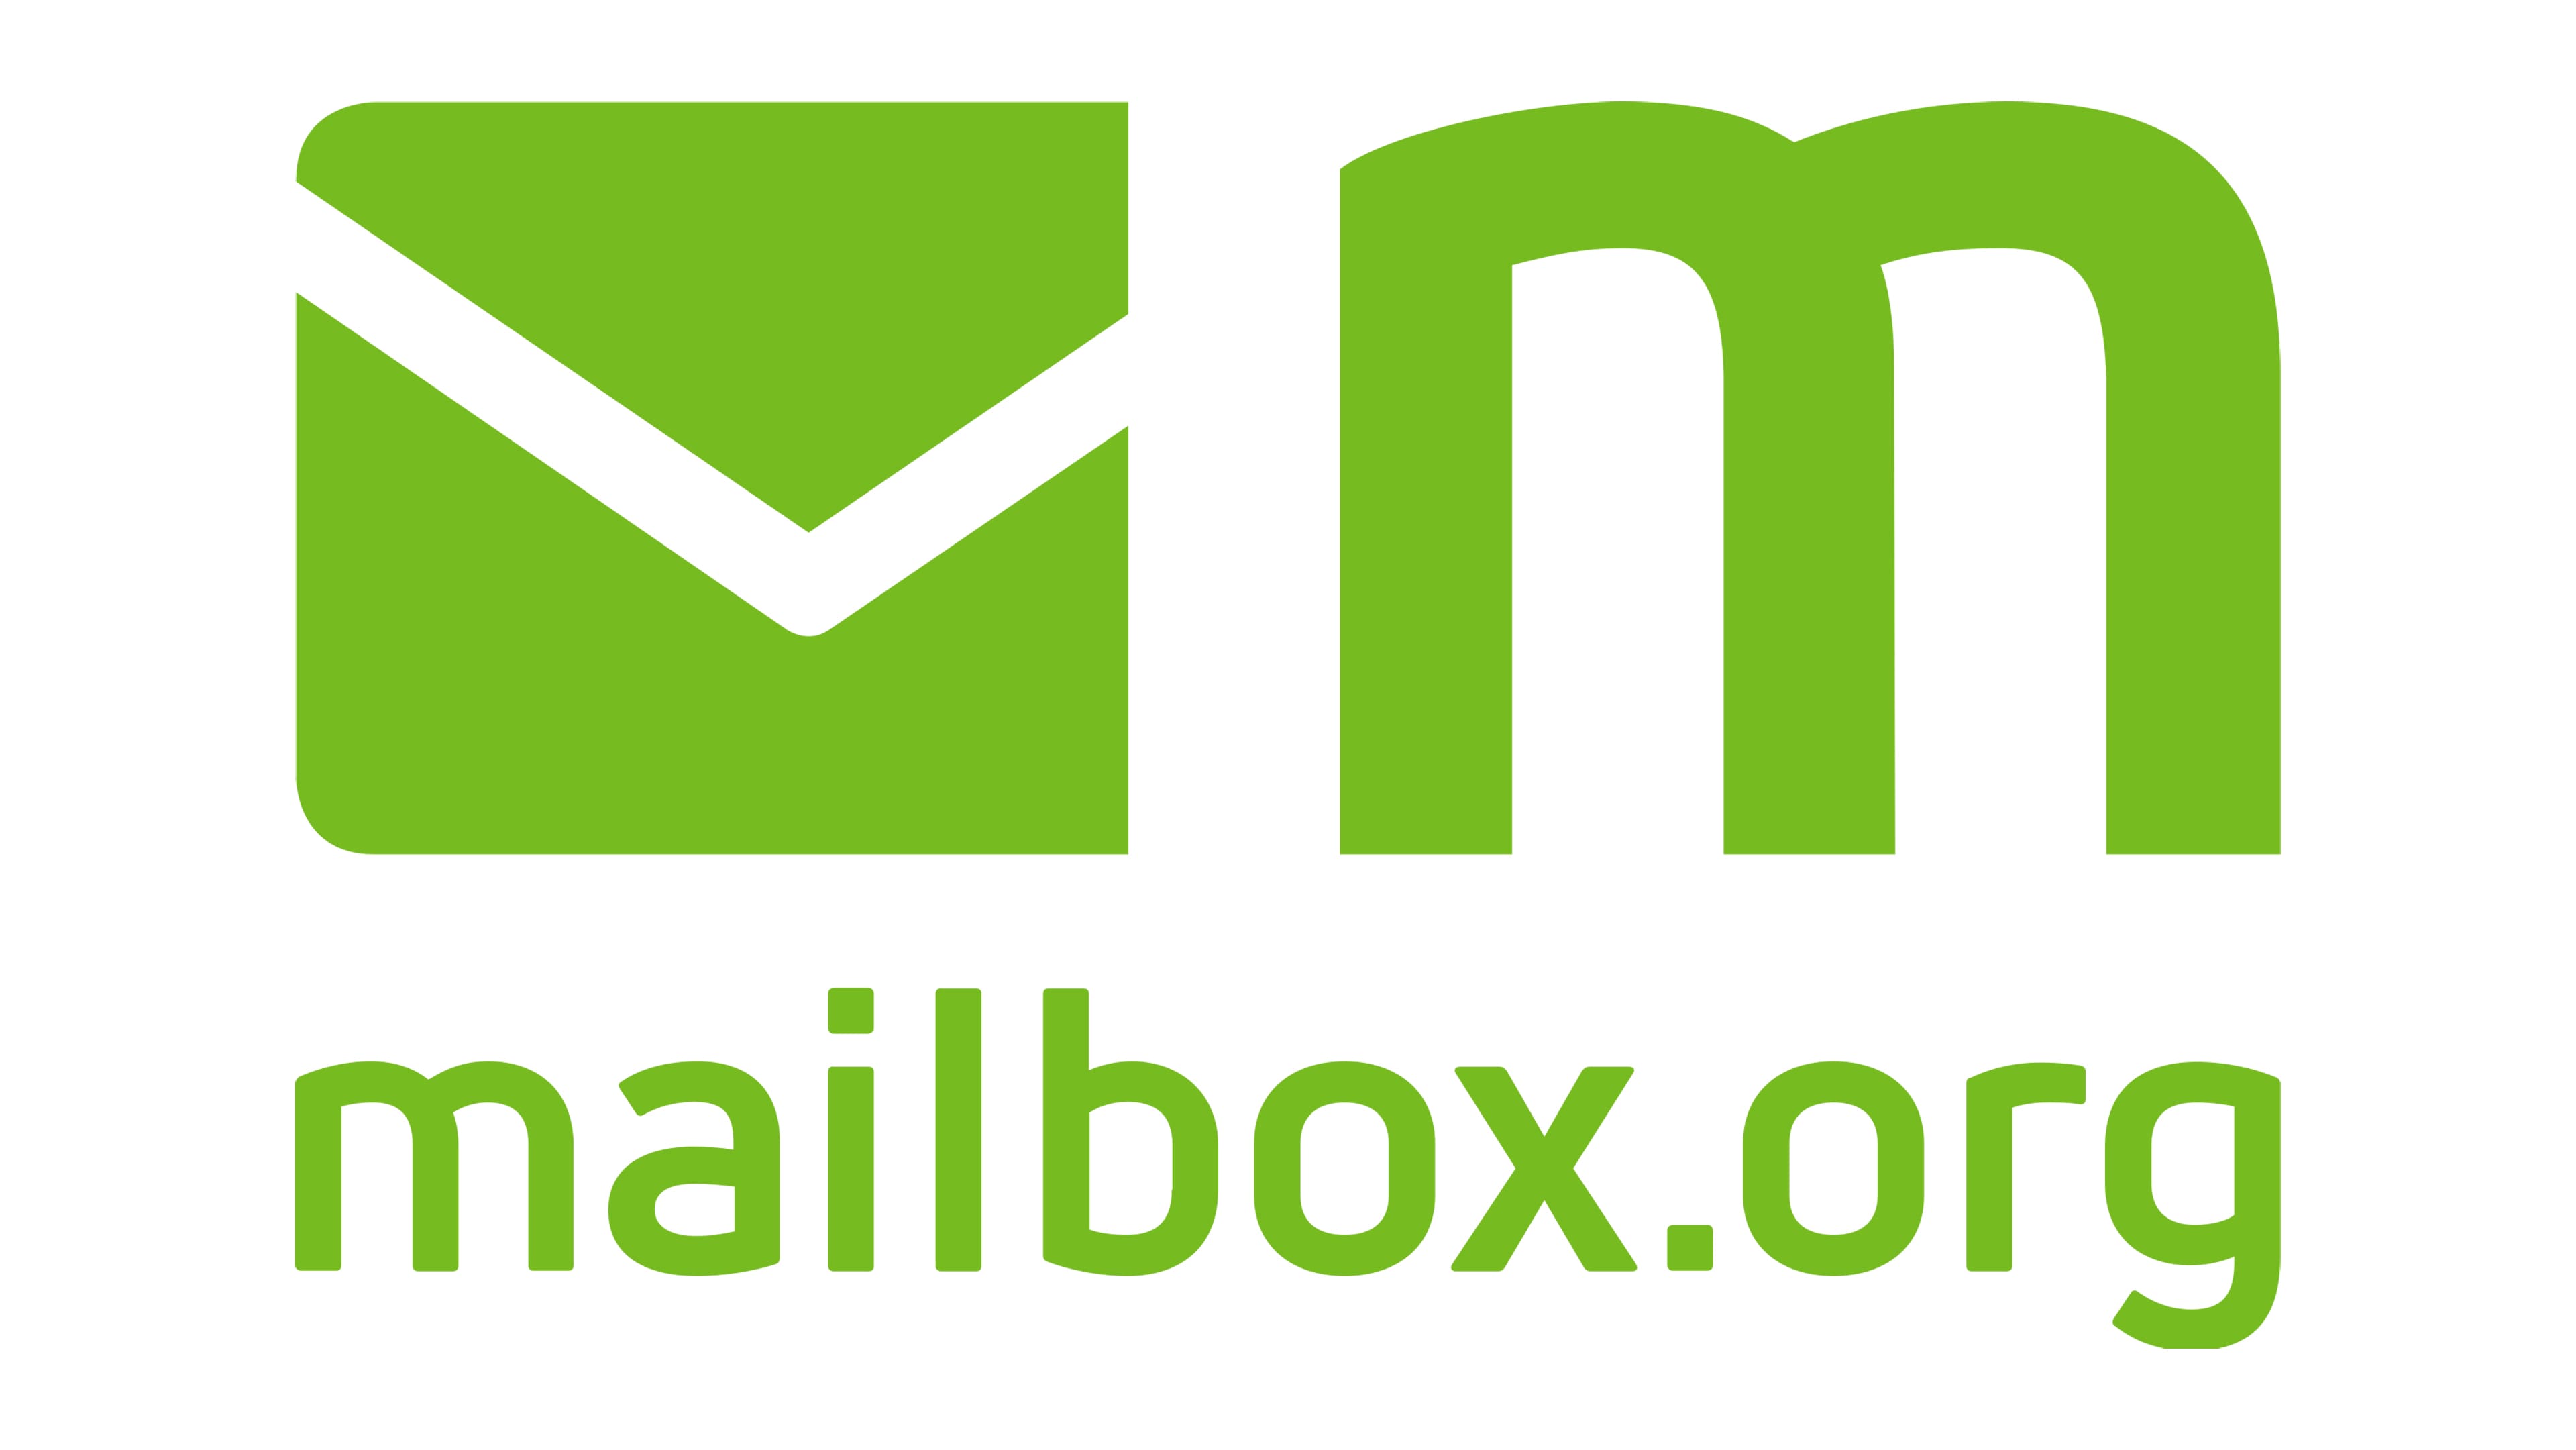 Logos org. Mailbox.org. .Org. Mailbox logo. Почта Box.